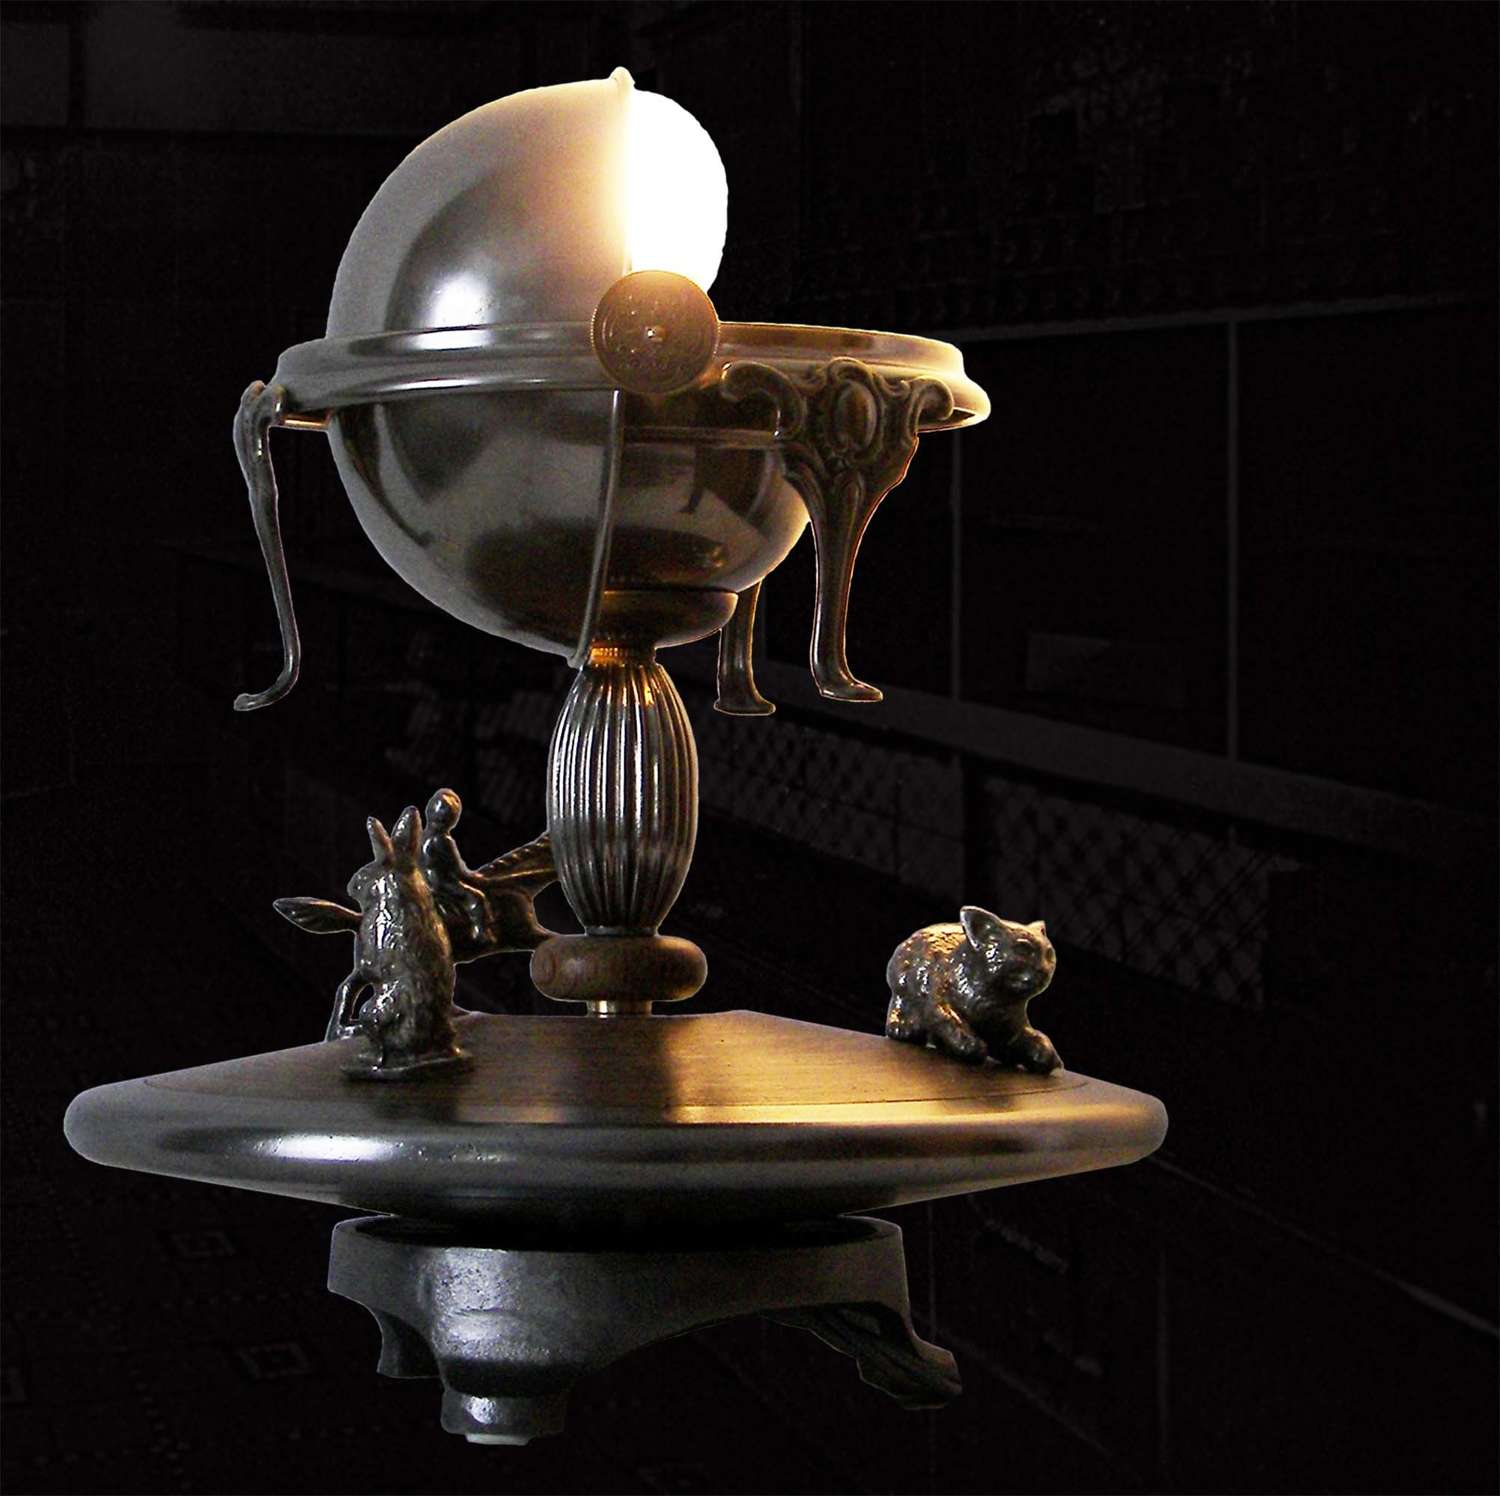 Collectible unique lamp - Abracadabra - by Gilles Bourlet Dartmouth